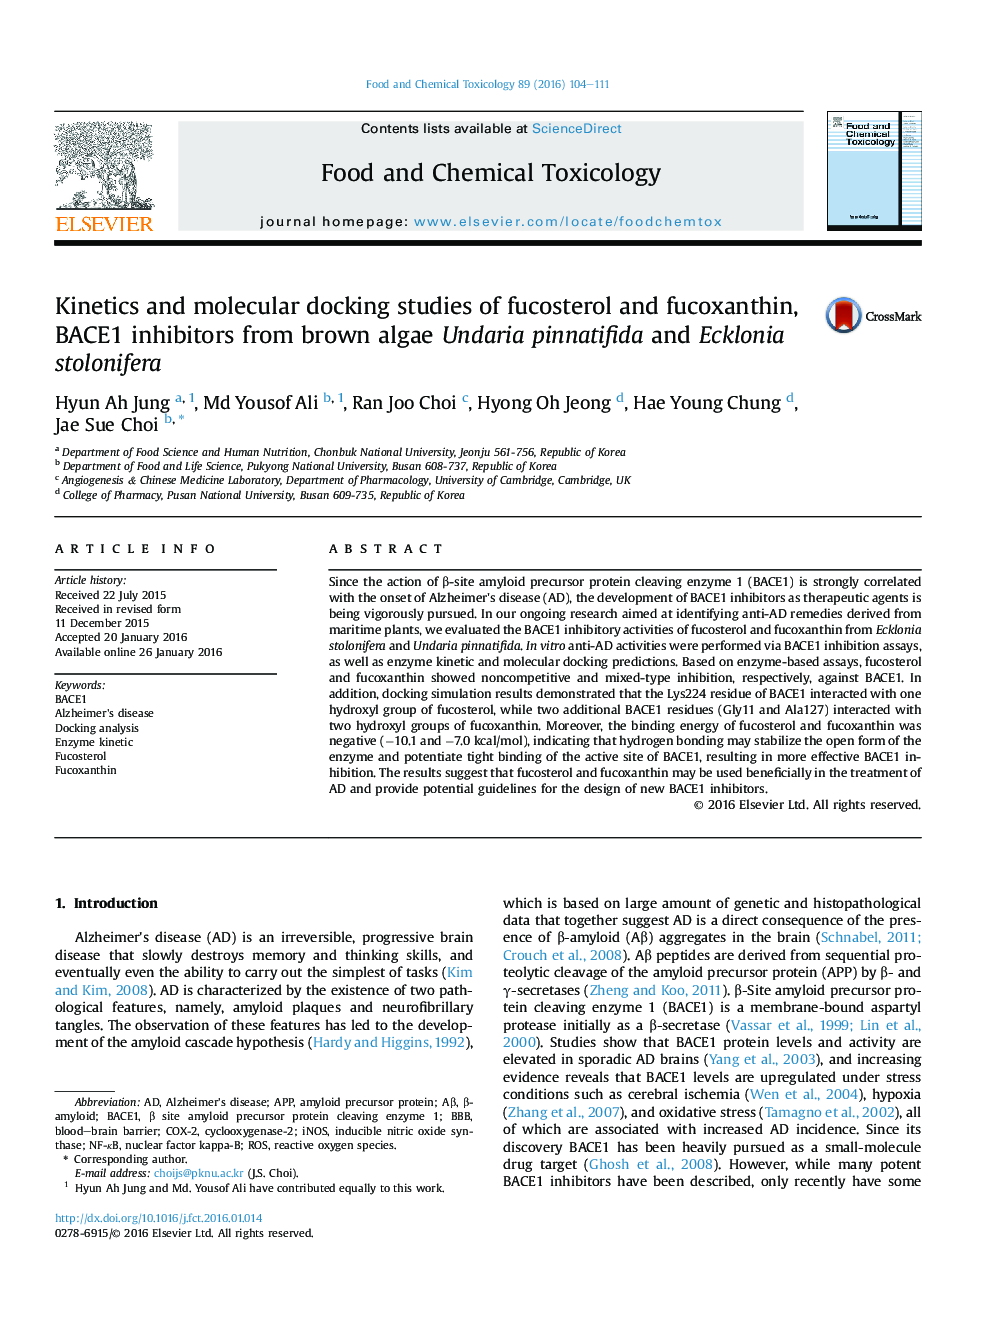 Kinetics and molecular docking studies of fucosterol and fucoxanthin, BACE1 inhibitors from brown algae Undaria pinnatifida and Ecklonia stolonifera